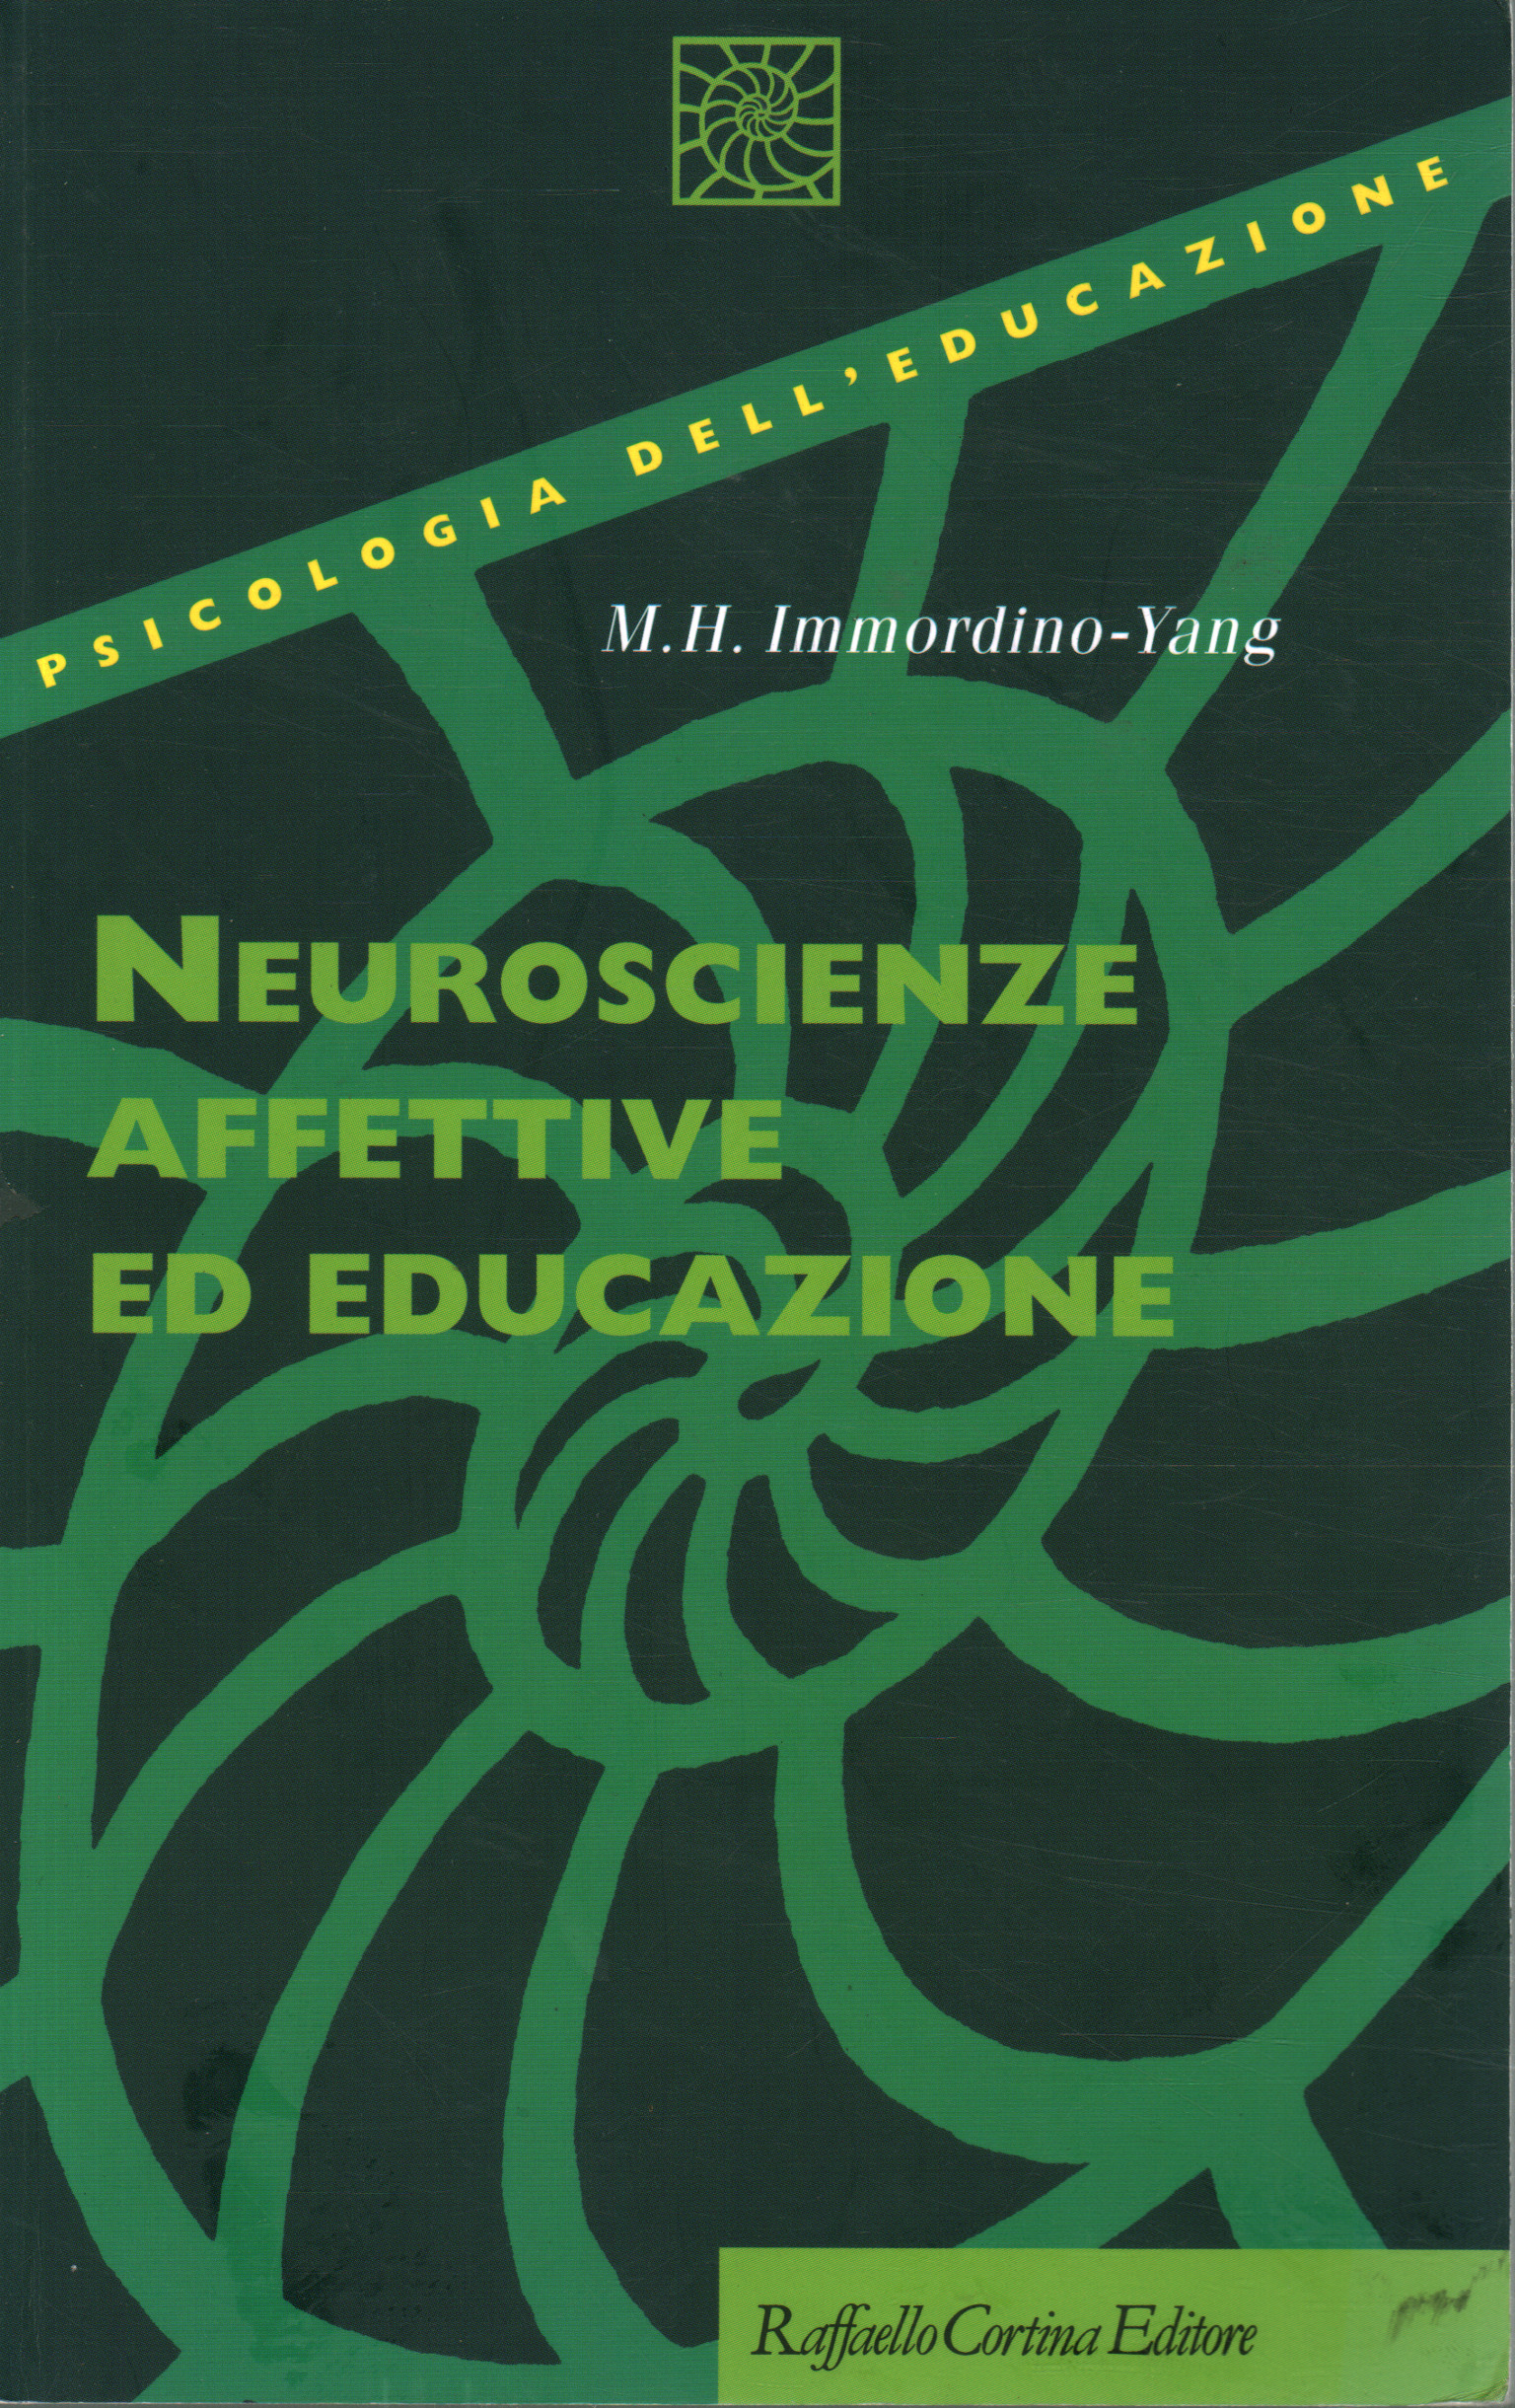 Affective Neuroscience and Education, Mary Helen Immordino-Yang